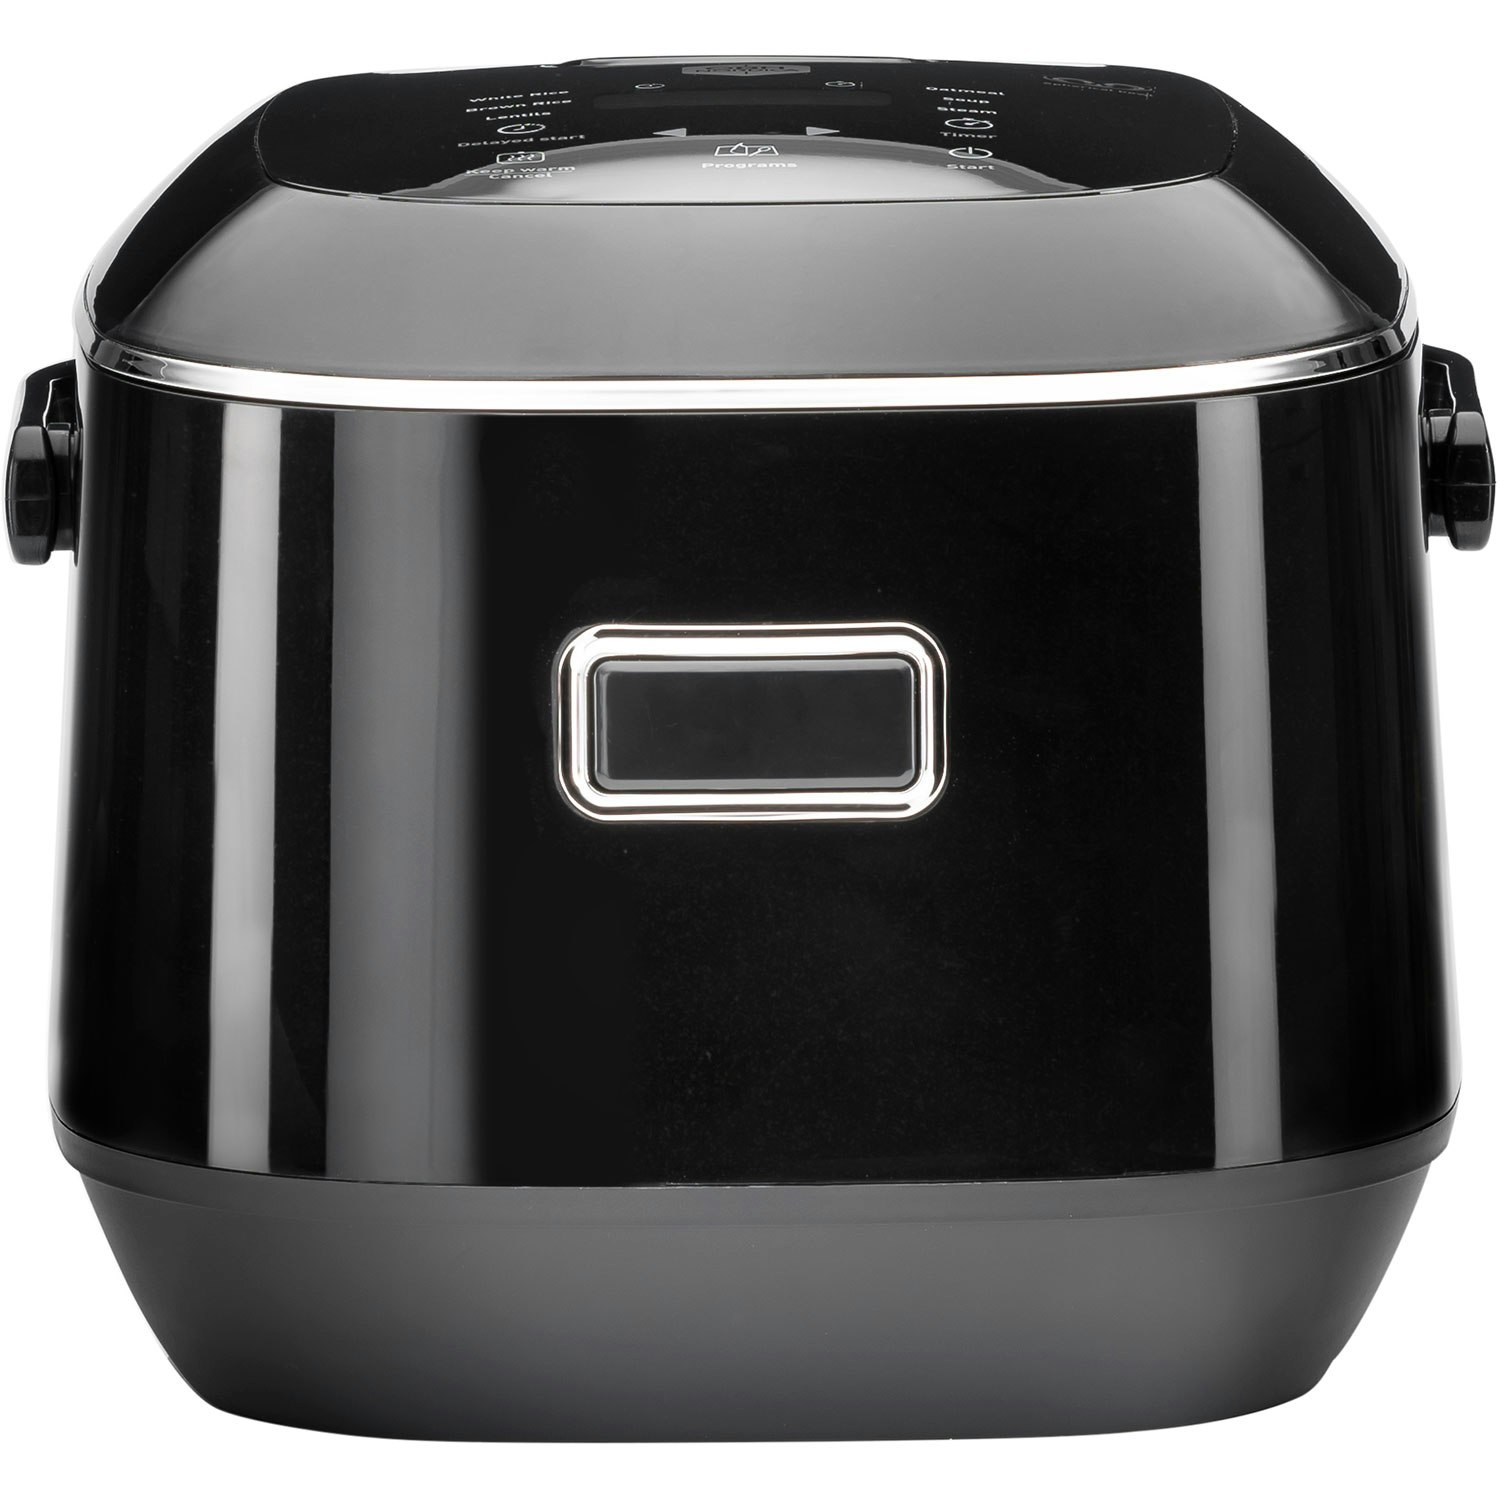 https://royaldesign.com/image/11/obh-nordica-versatile-2-l-rice-cooker-black-4